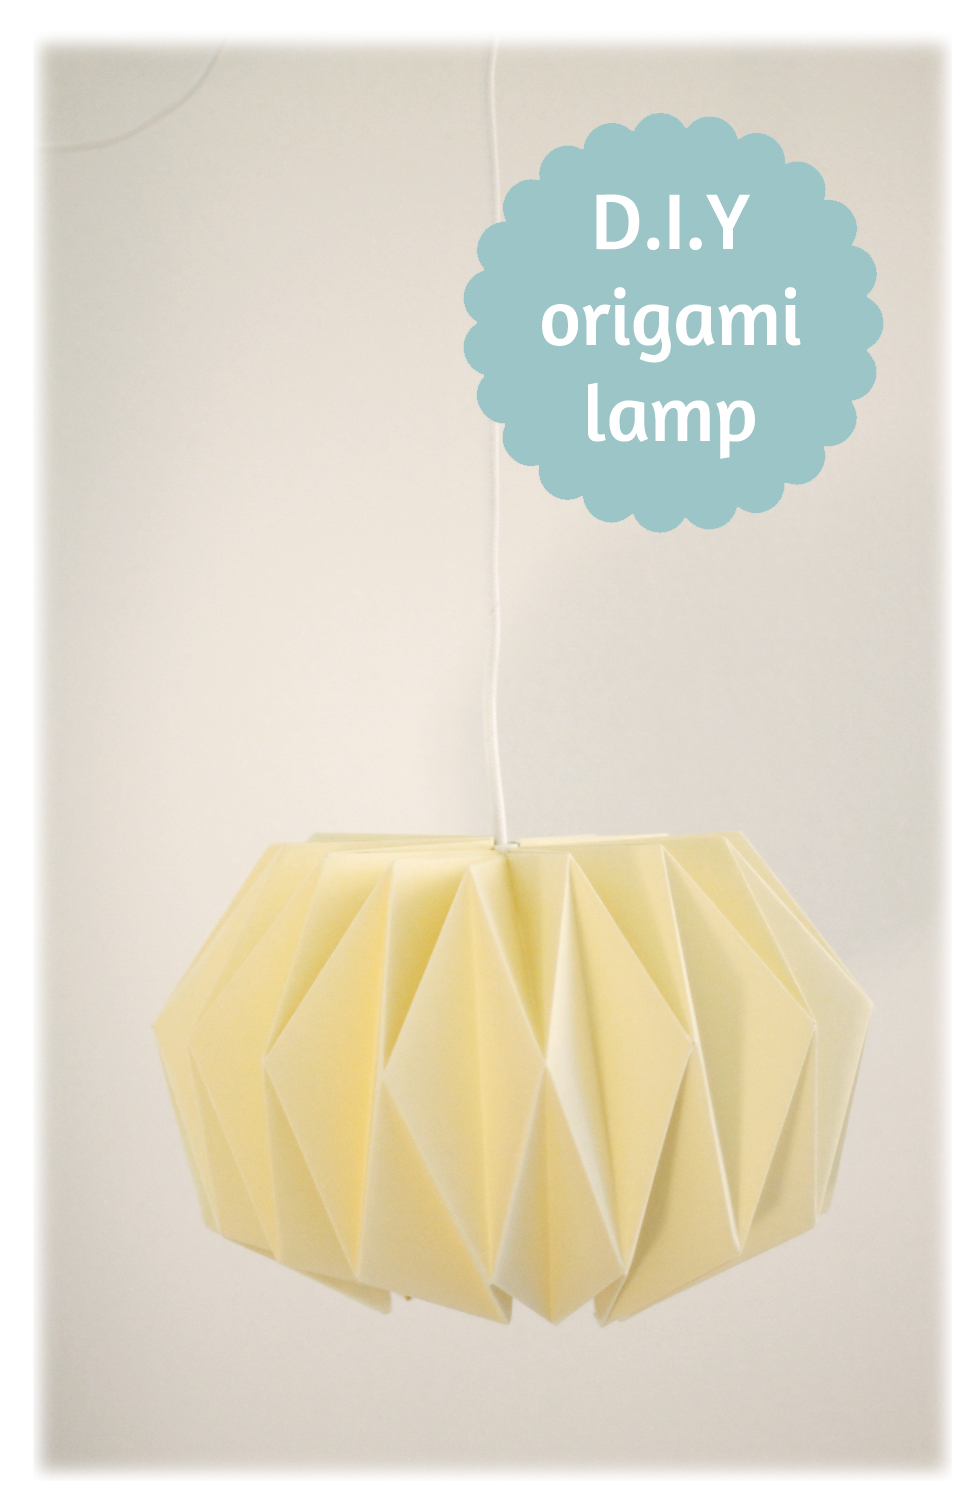 moeder D.w.z Miniatuur work-and-process: Weekend D.i.Y - Origami lampenkap